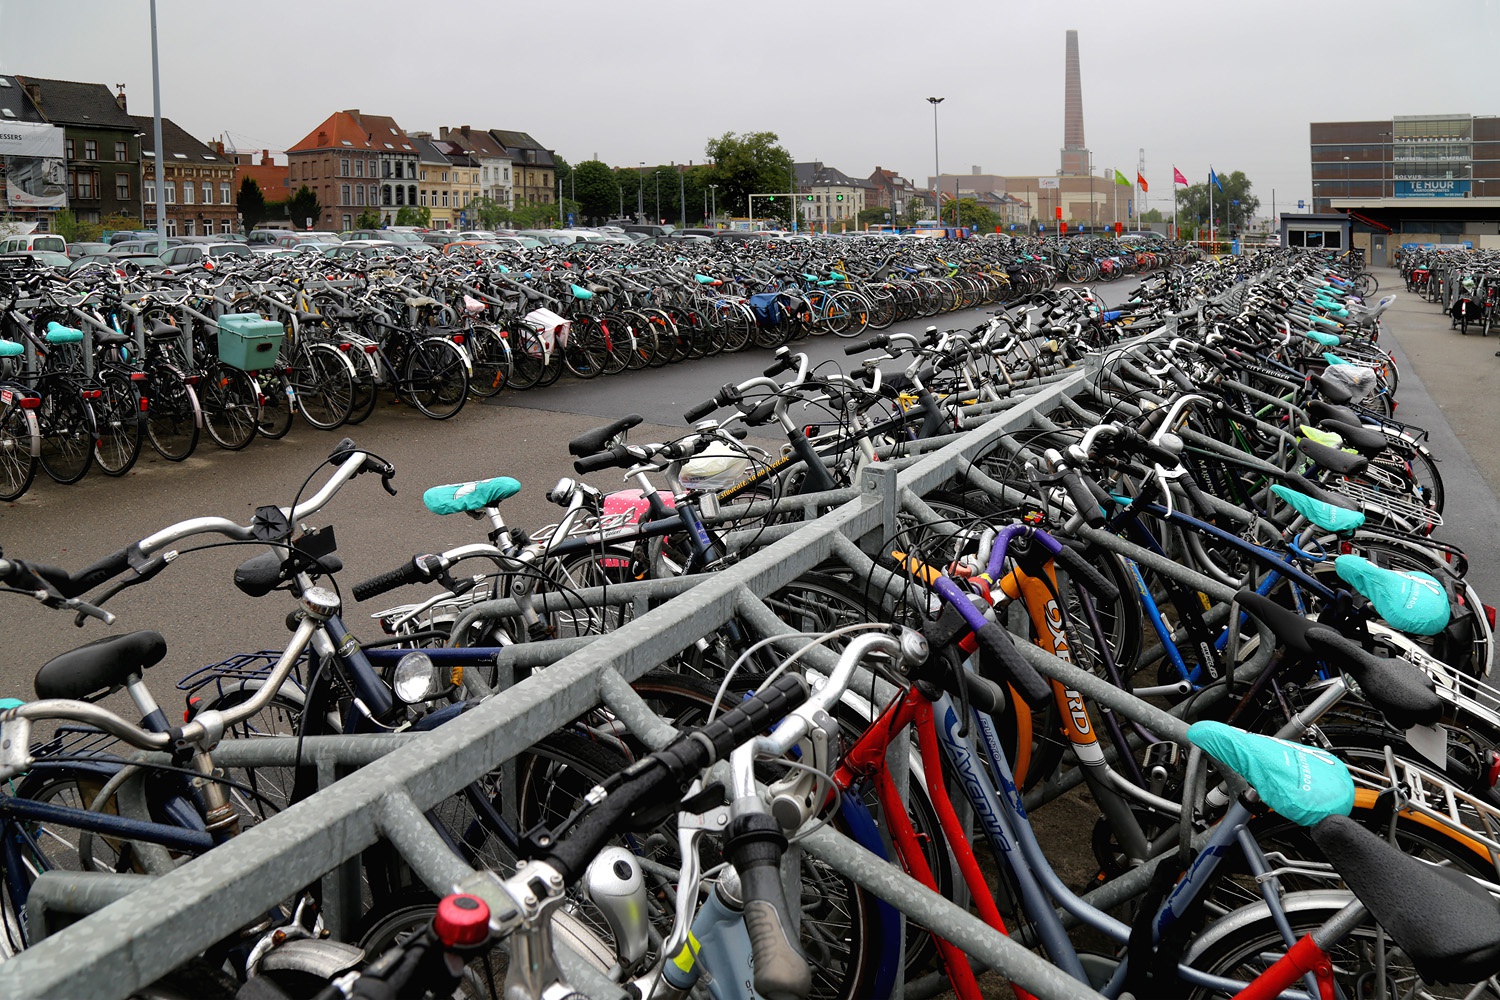 bill-hocker-bicycle-parking-ghent-belgium-2016